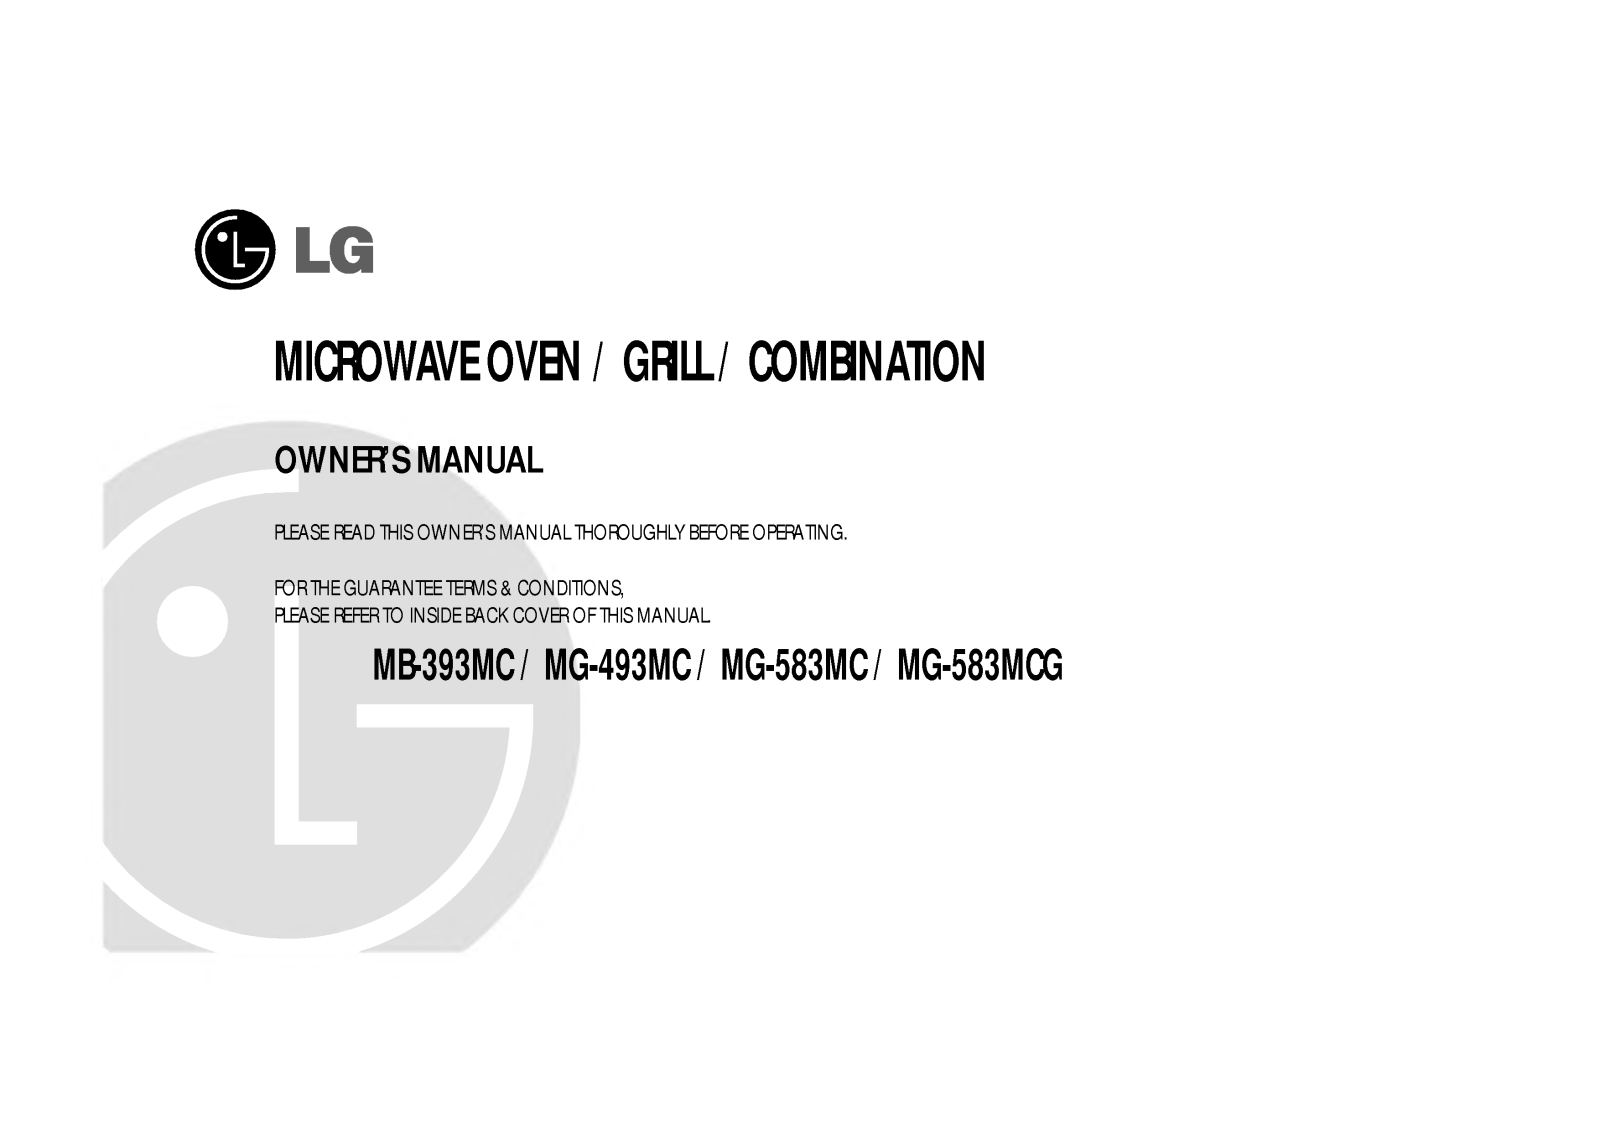 LG MG-583MCG User Manual